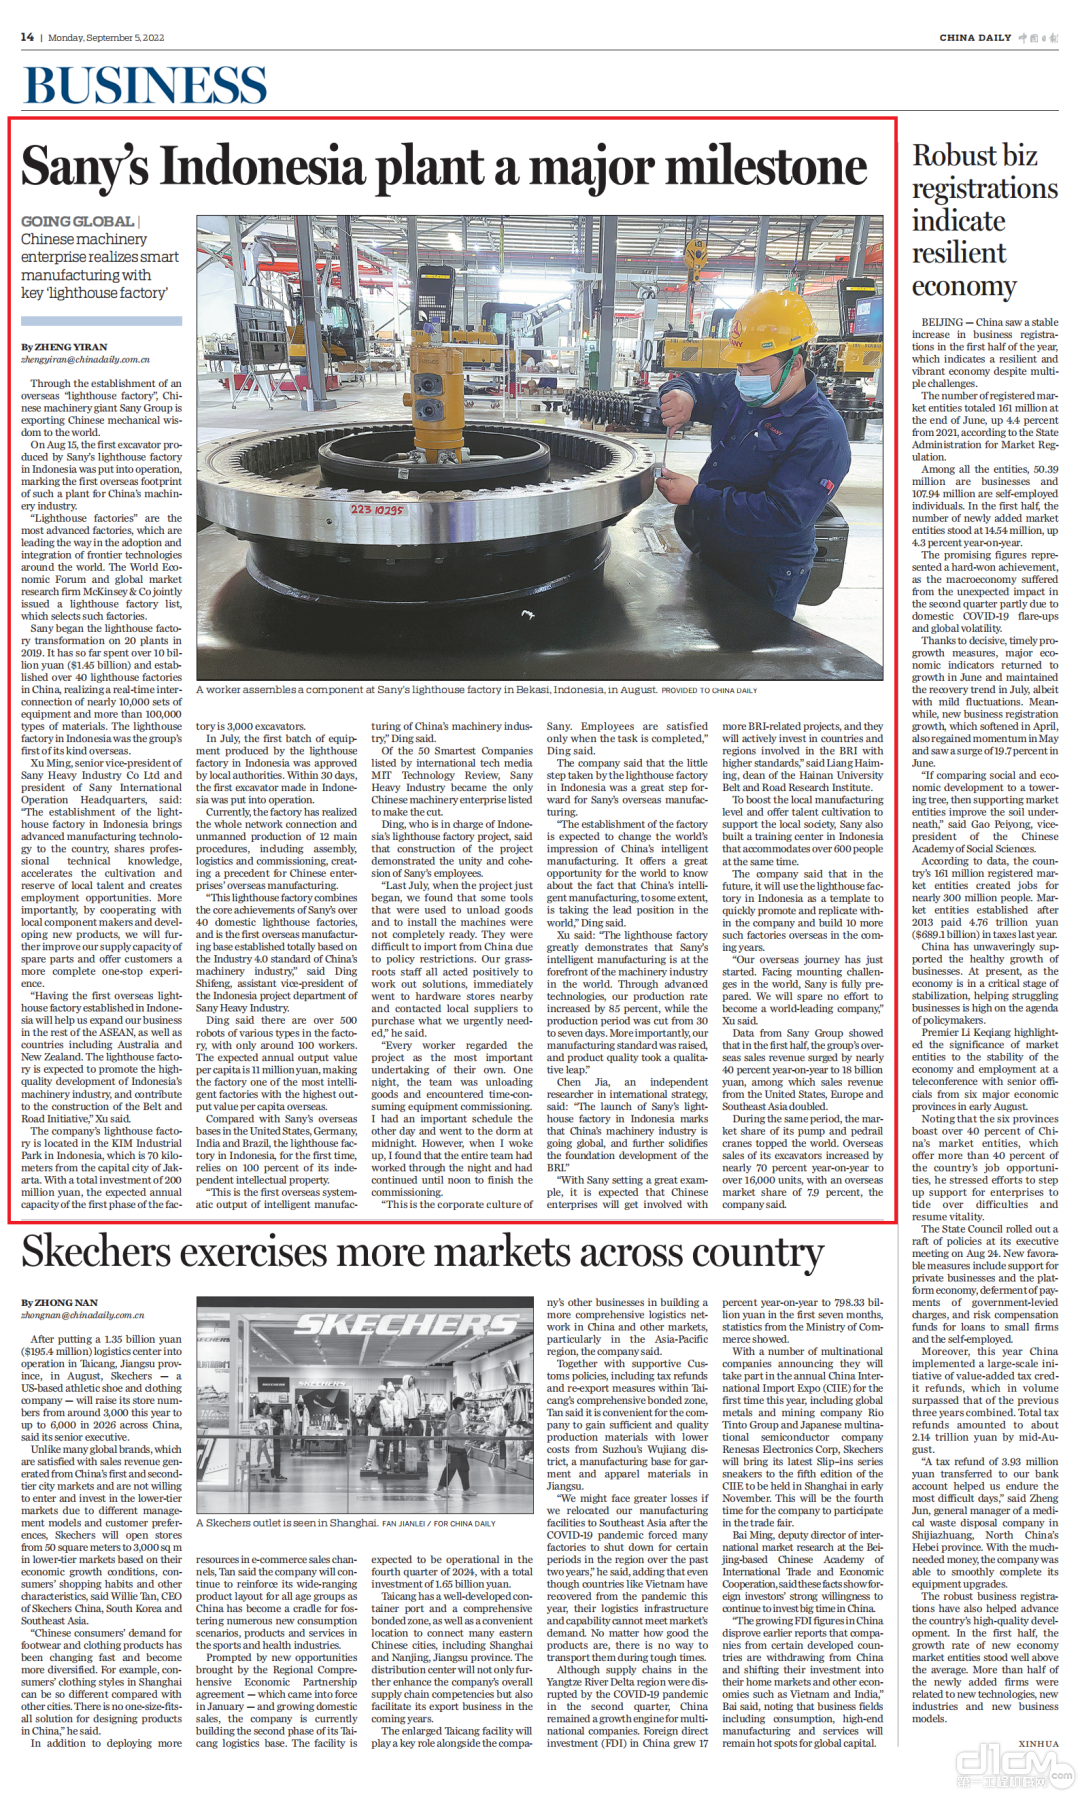 China Daily中国日报聚焦三一“印尼灯塔”工厂投产